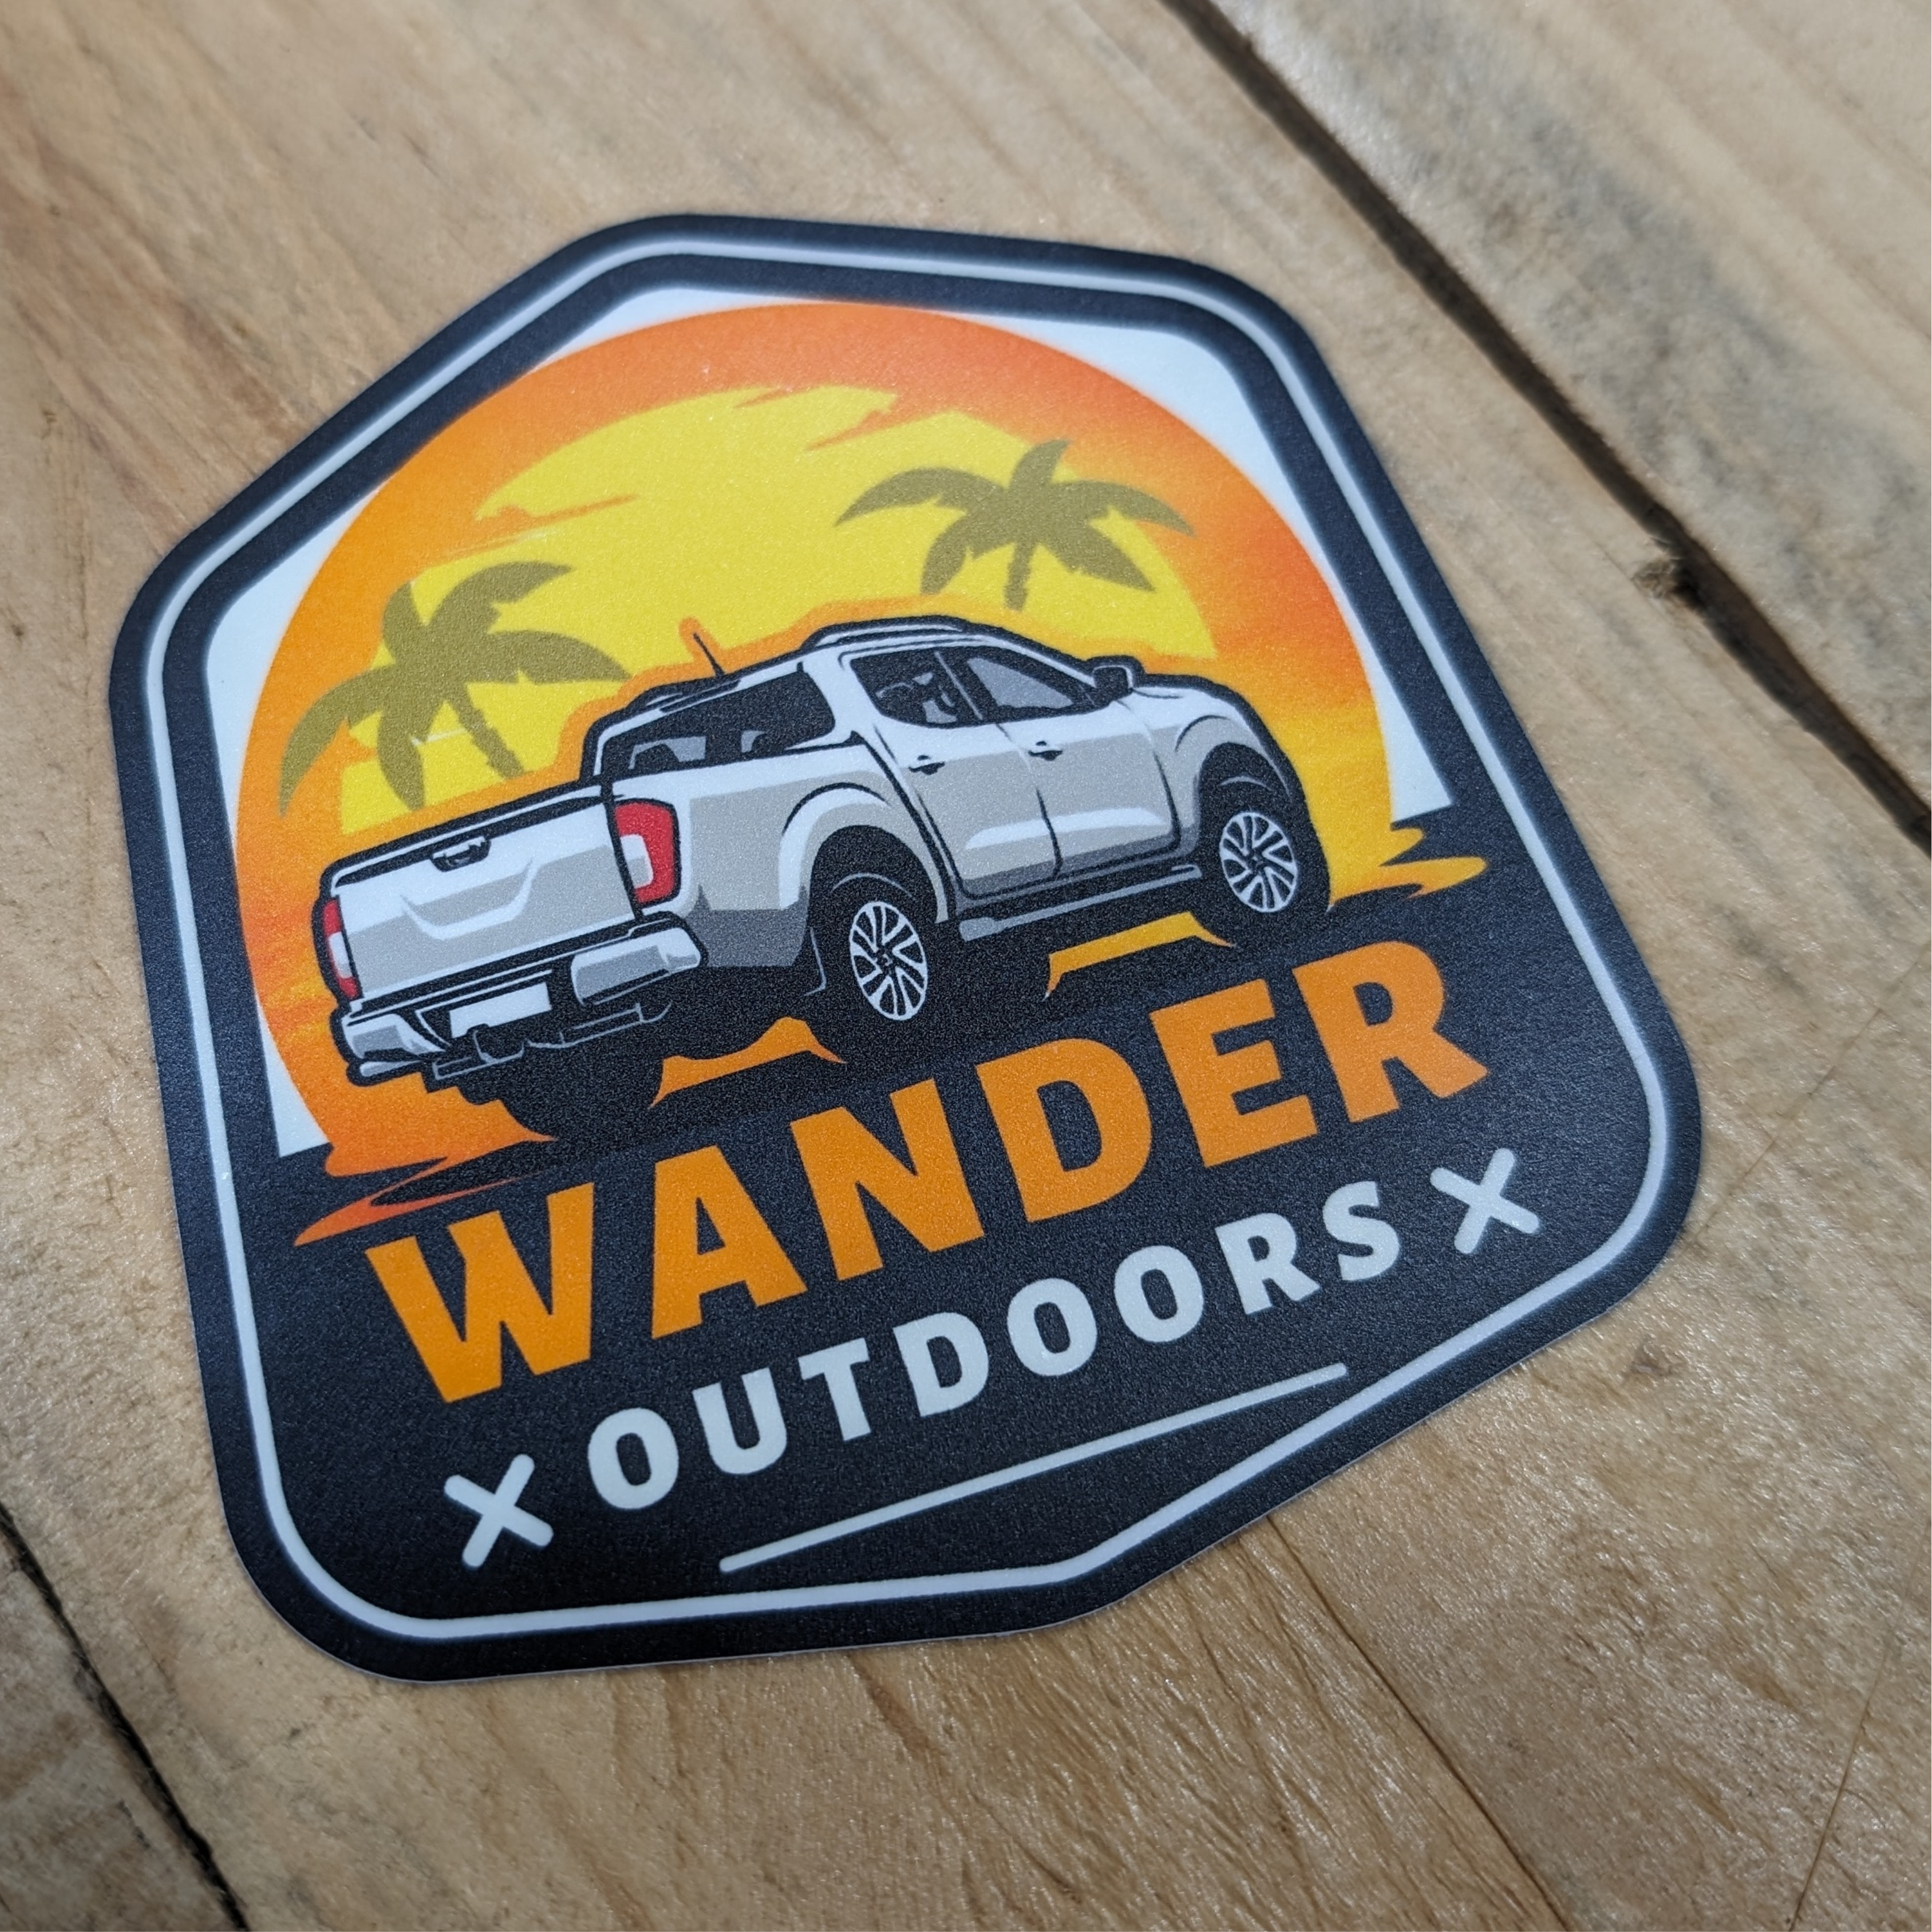 Wander Outdoor Ute Sticker